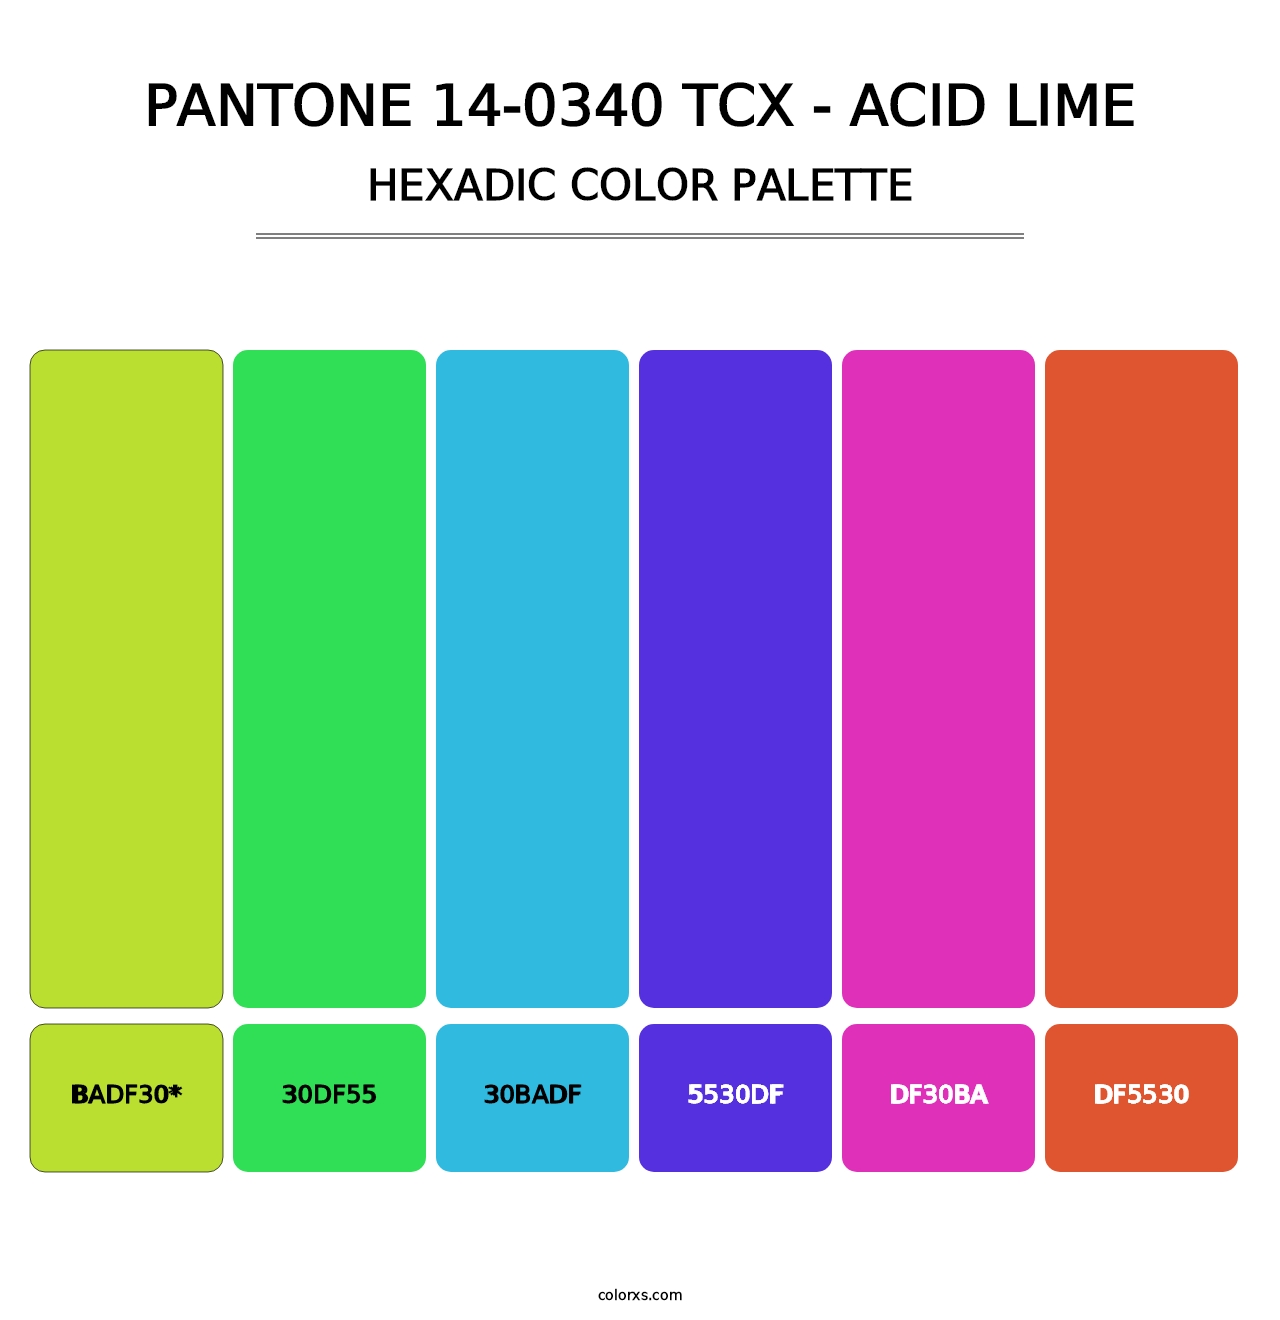 PANTONE 14-0340 TCX - Acid Lime - Hexadic Color Palette